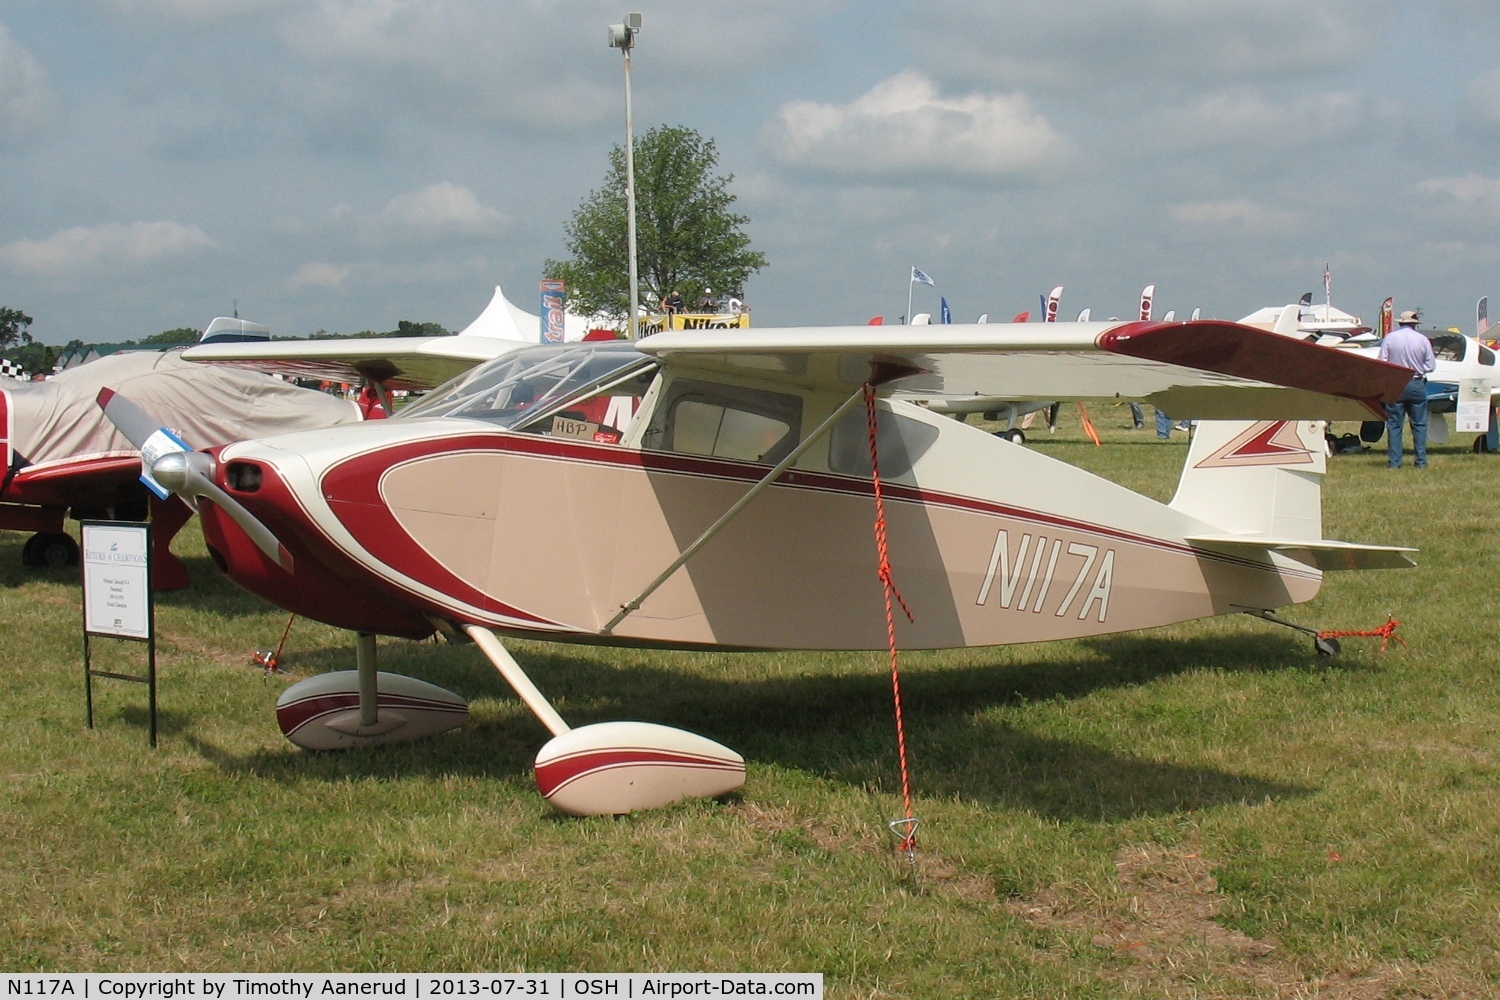 N117A, 1965 Wittman W-8 Tailwind C/N 158, 1965 Wittman W-8 Tailwind, c/n: 158